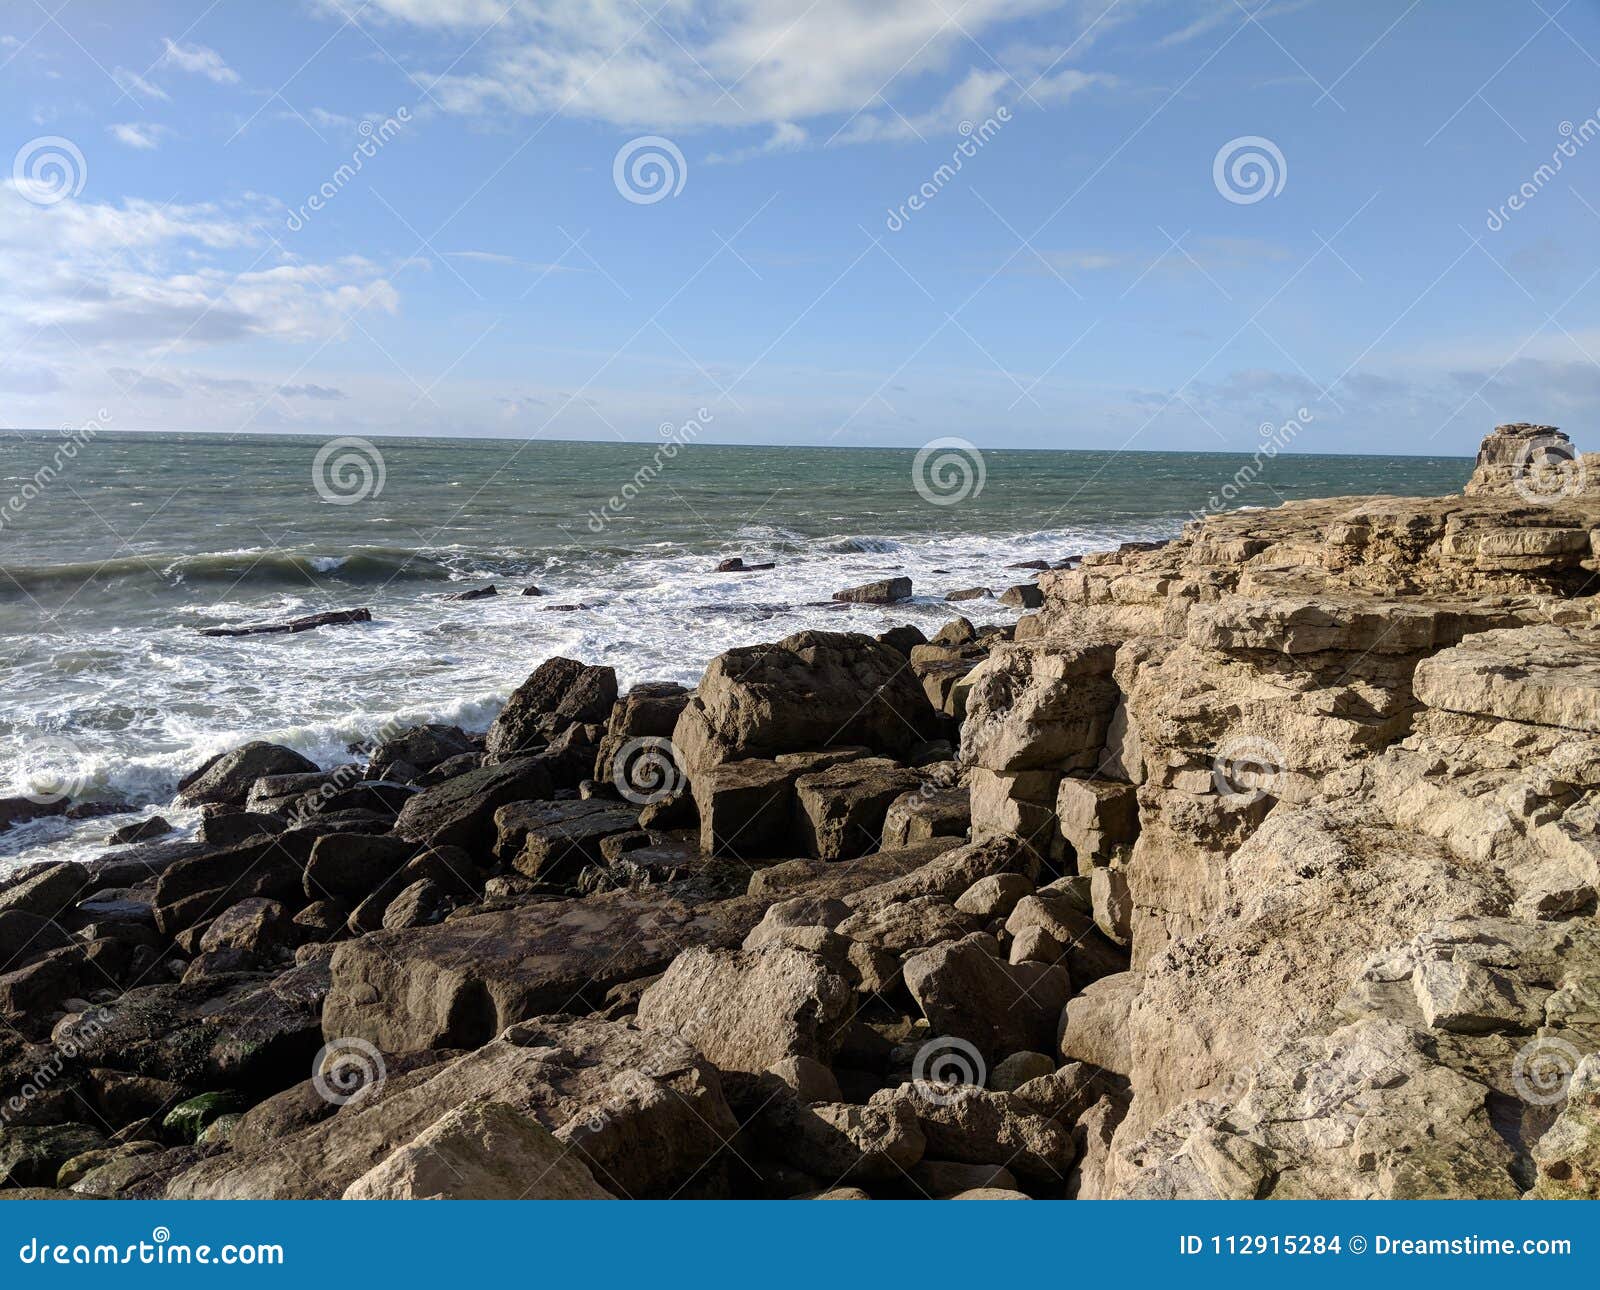 Waves breaking on rocks stock photo. Image of weymouth - 112915284